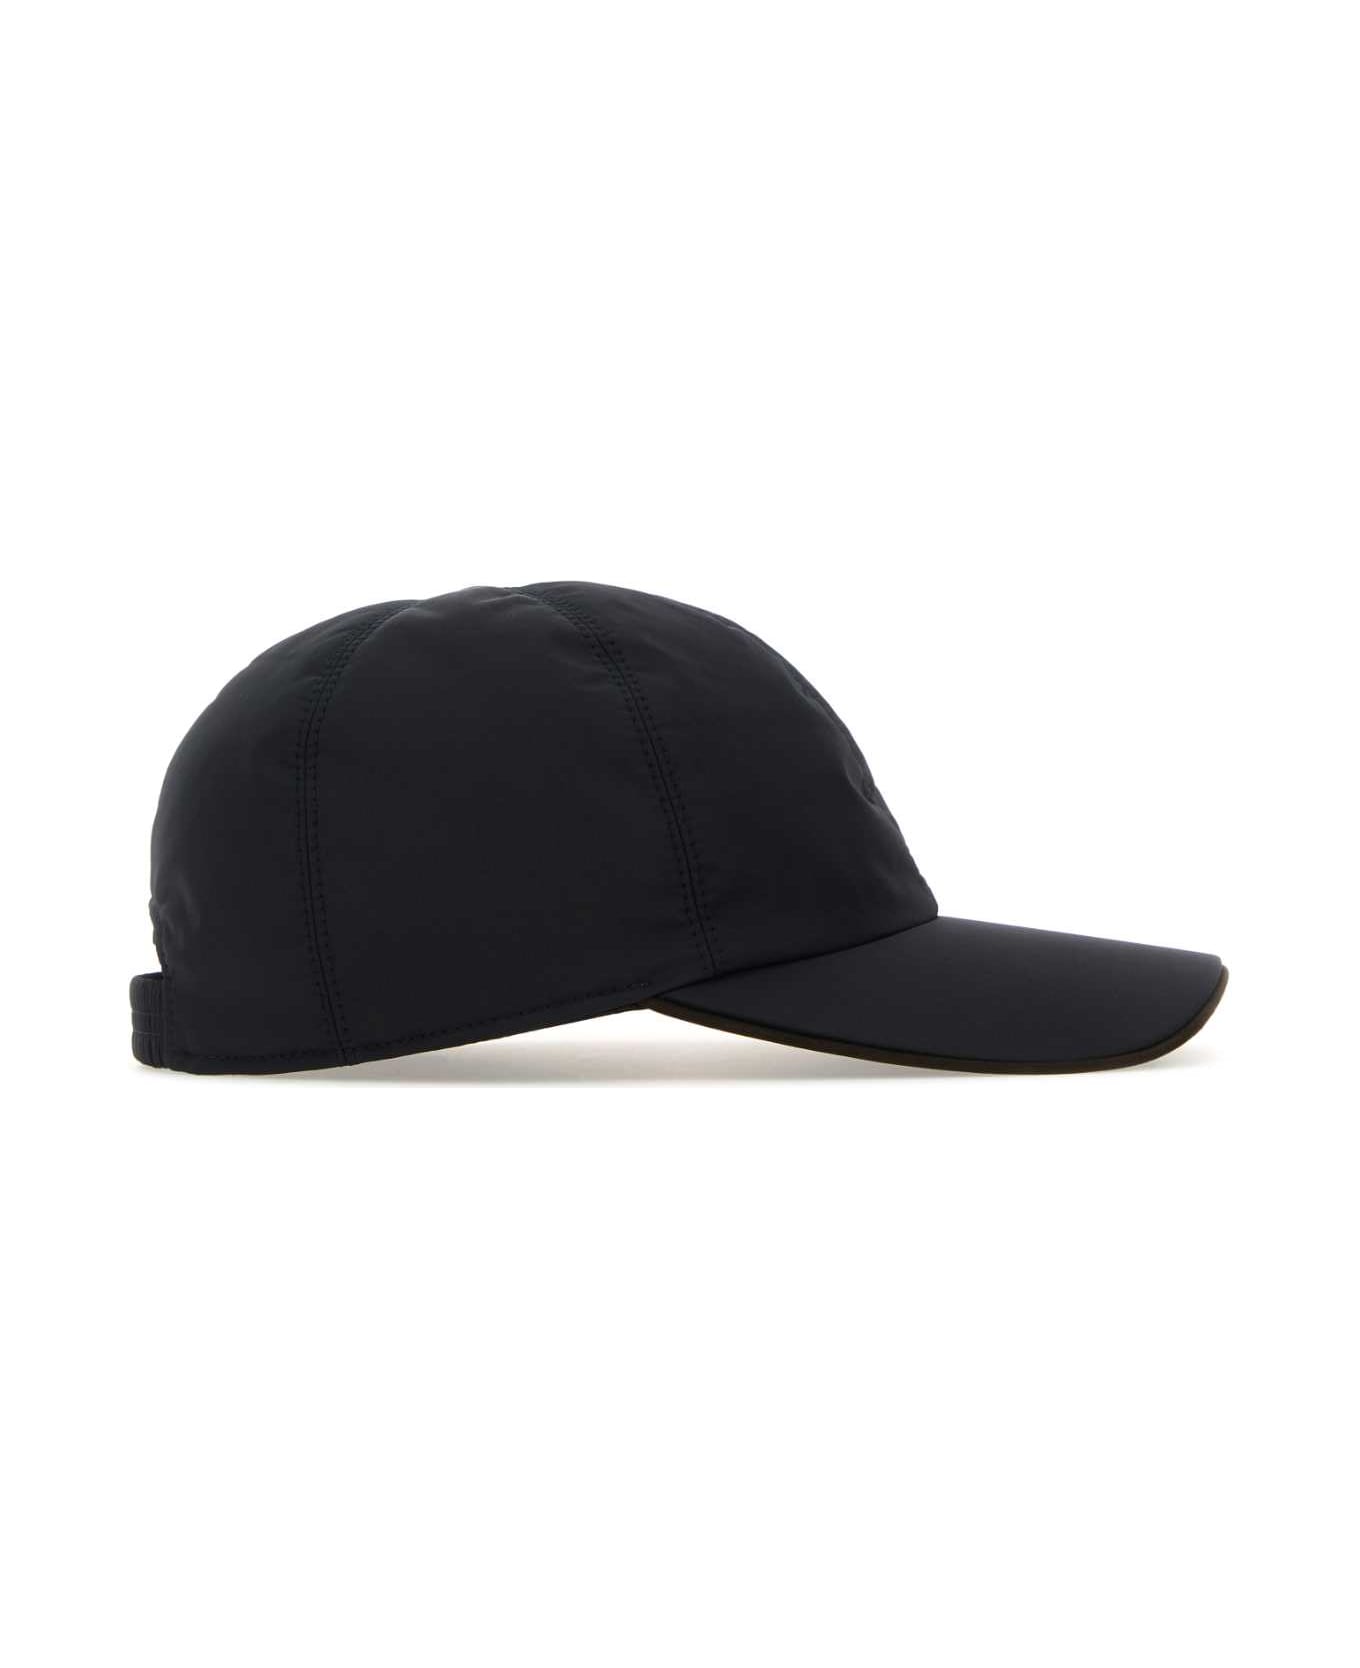 Zegna Black Polyester Baseball Cap - BL1 帽子